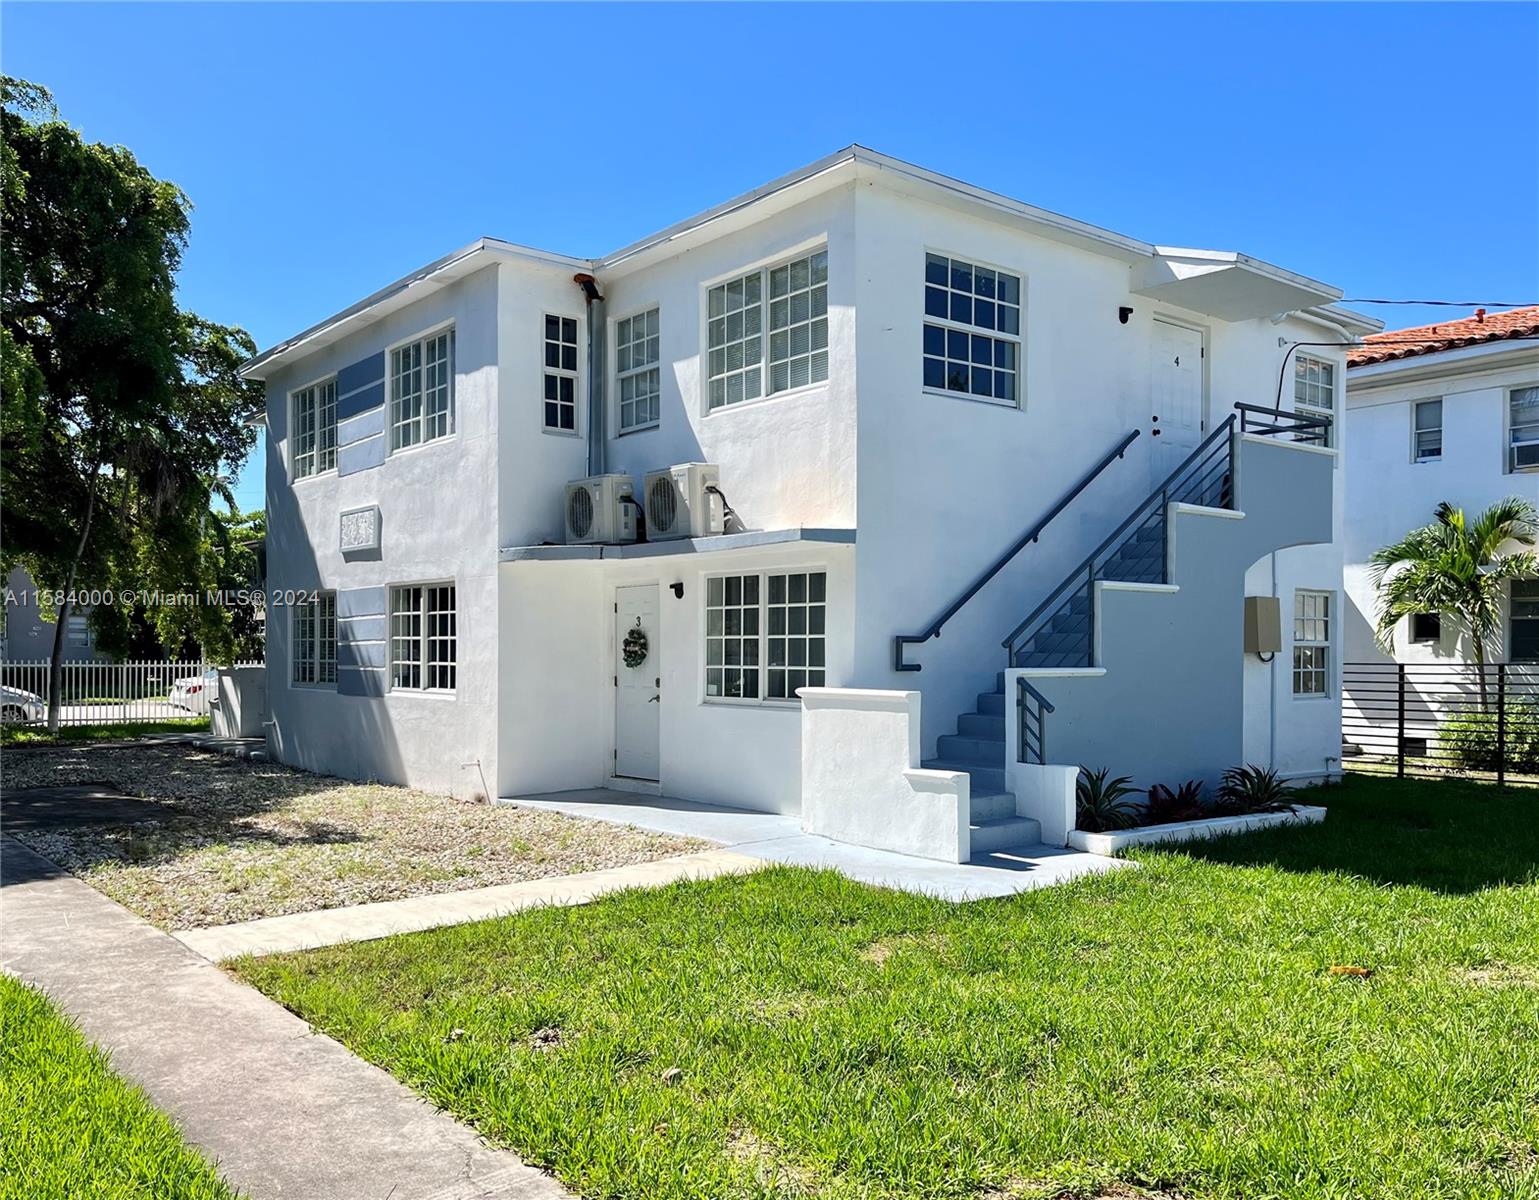 Rental Property at 1935 Marseille Dr, Miami Beach, Miami-Dade County, Florida -  - $1,475,000 MO.